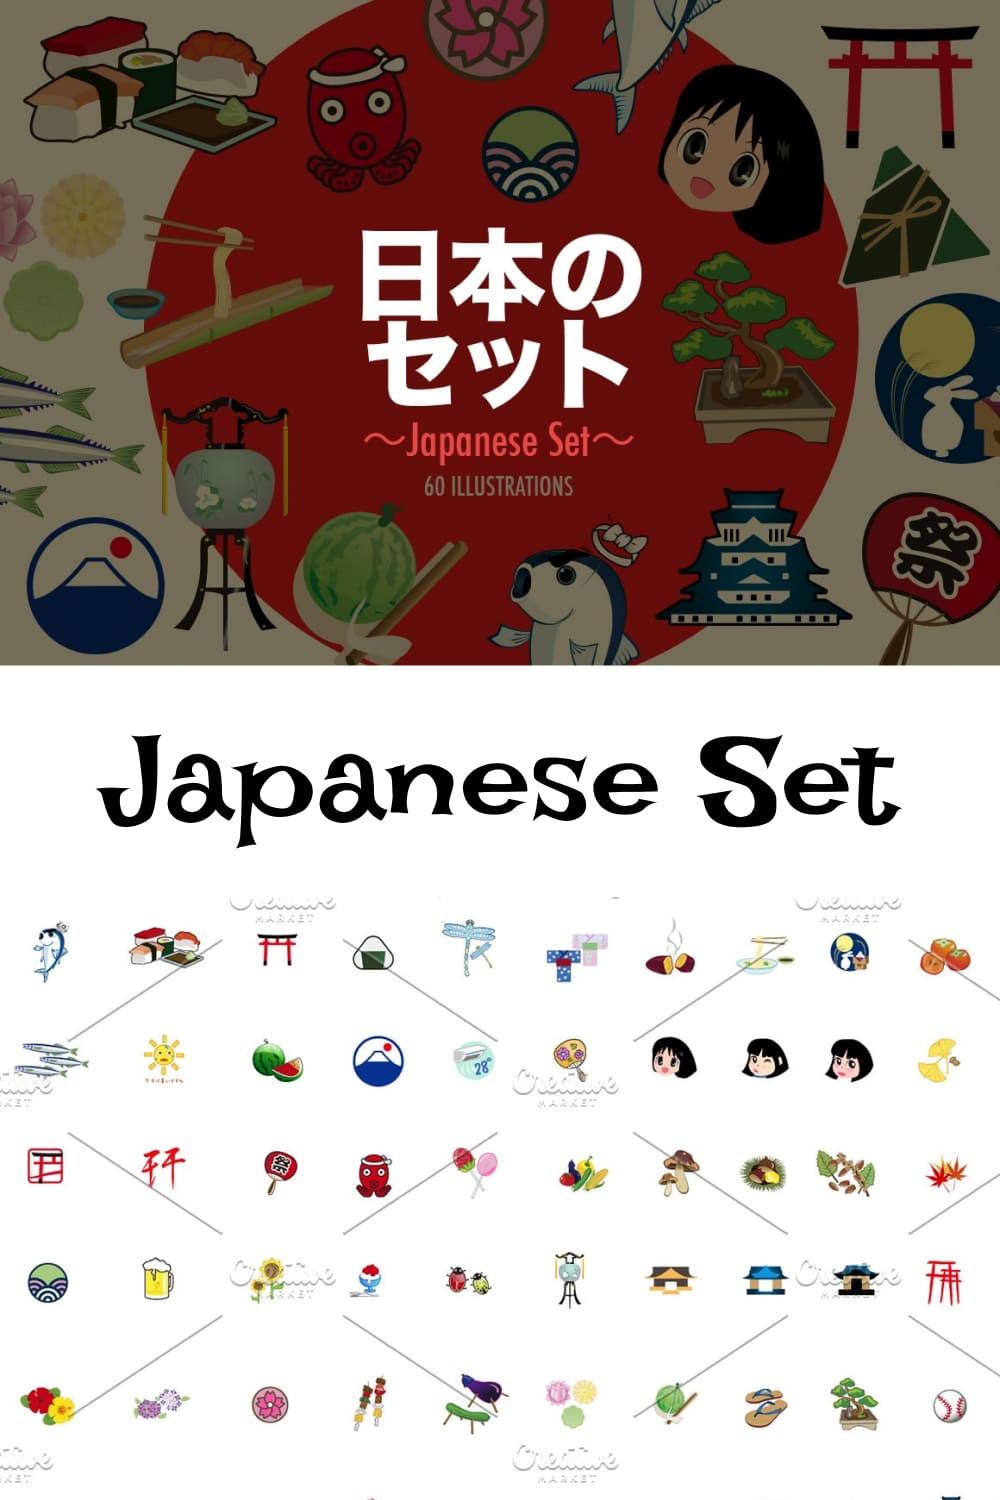 Japanese Set - Pinterest.